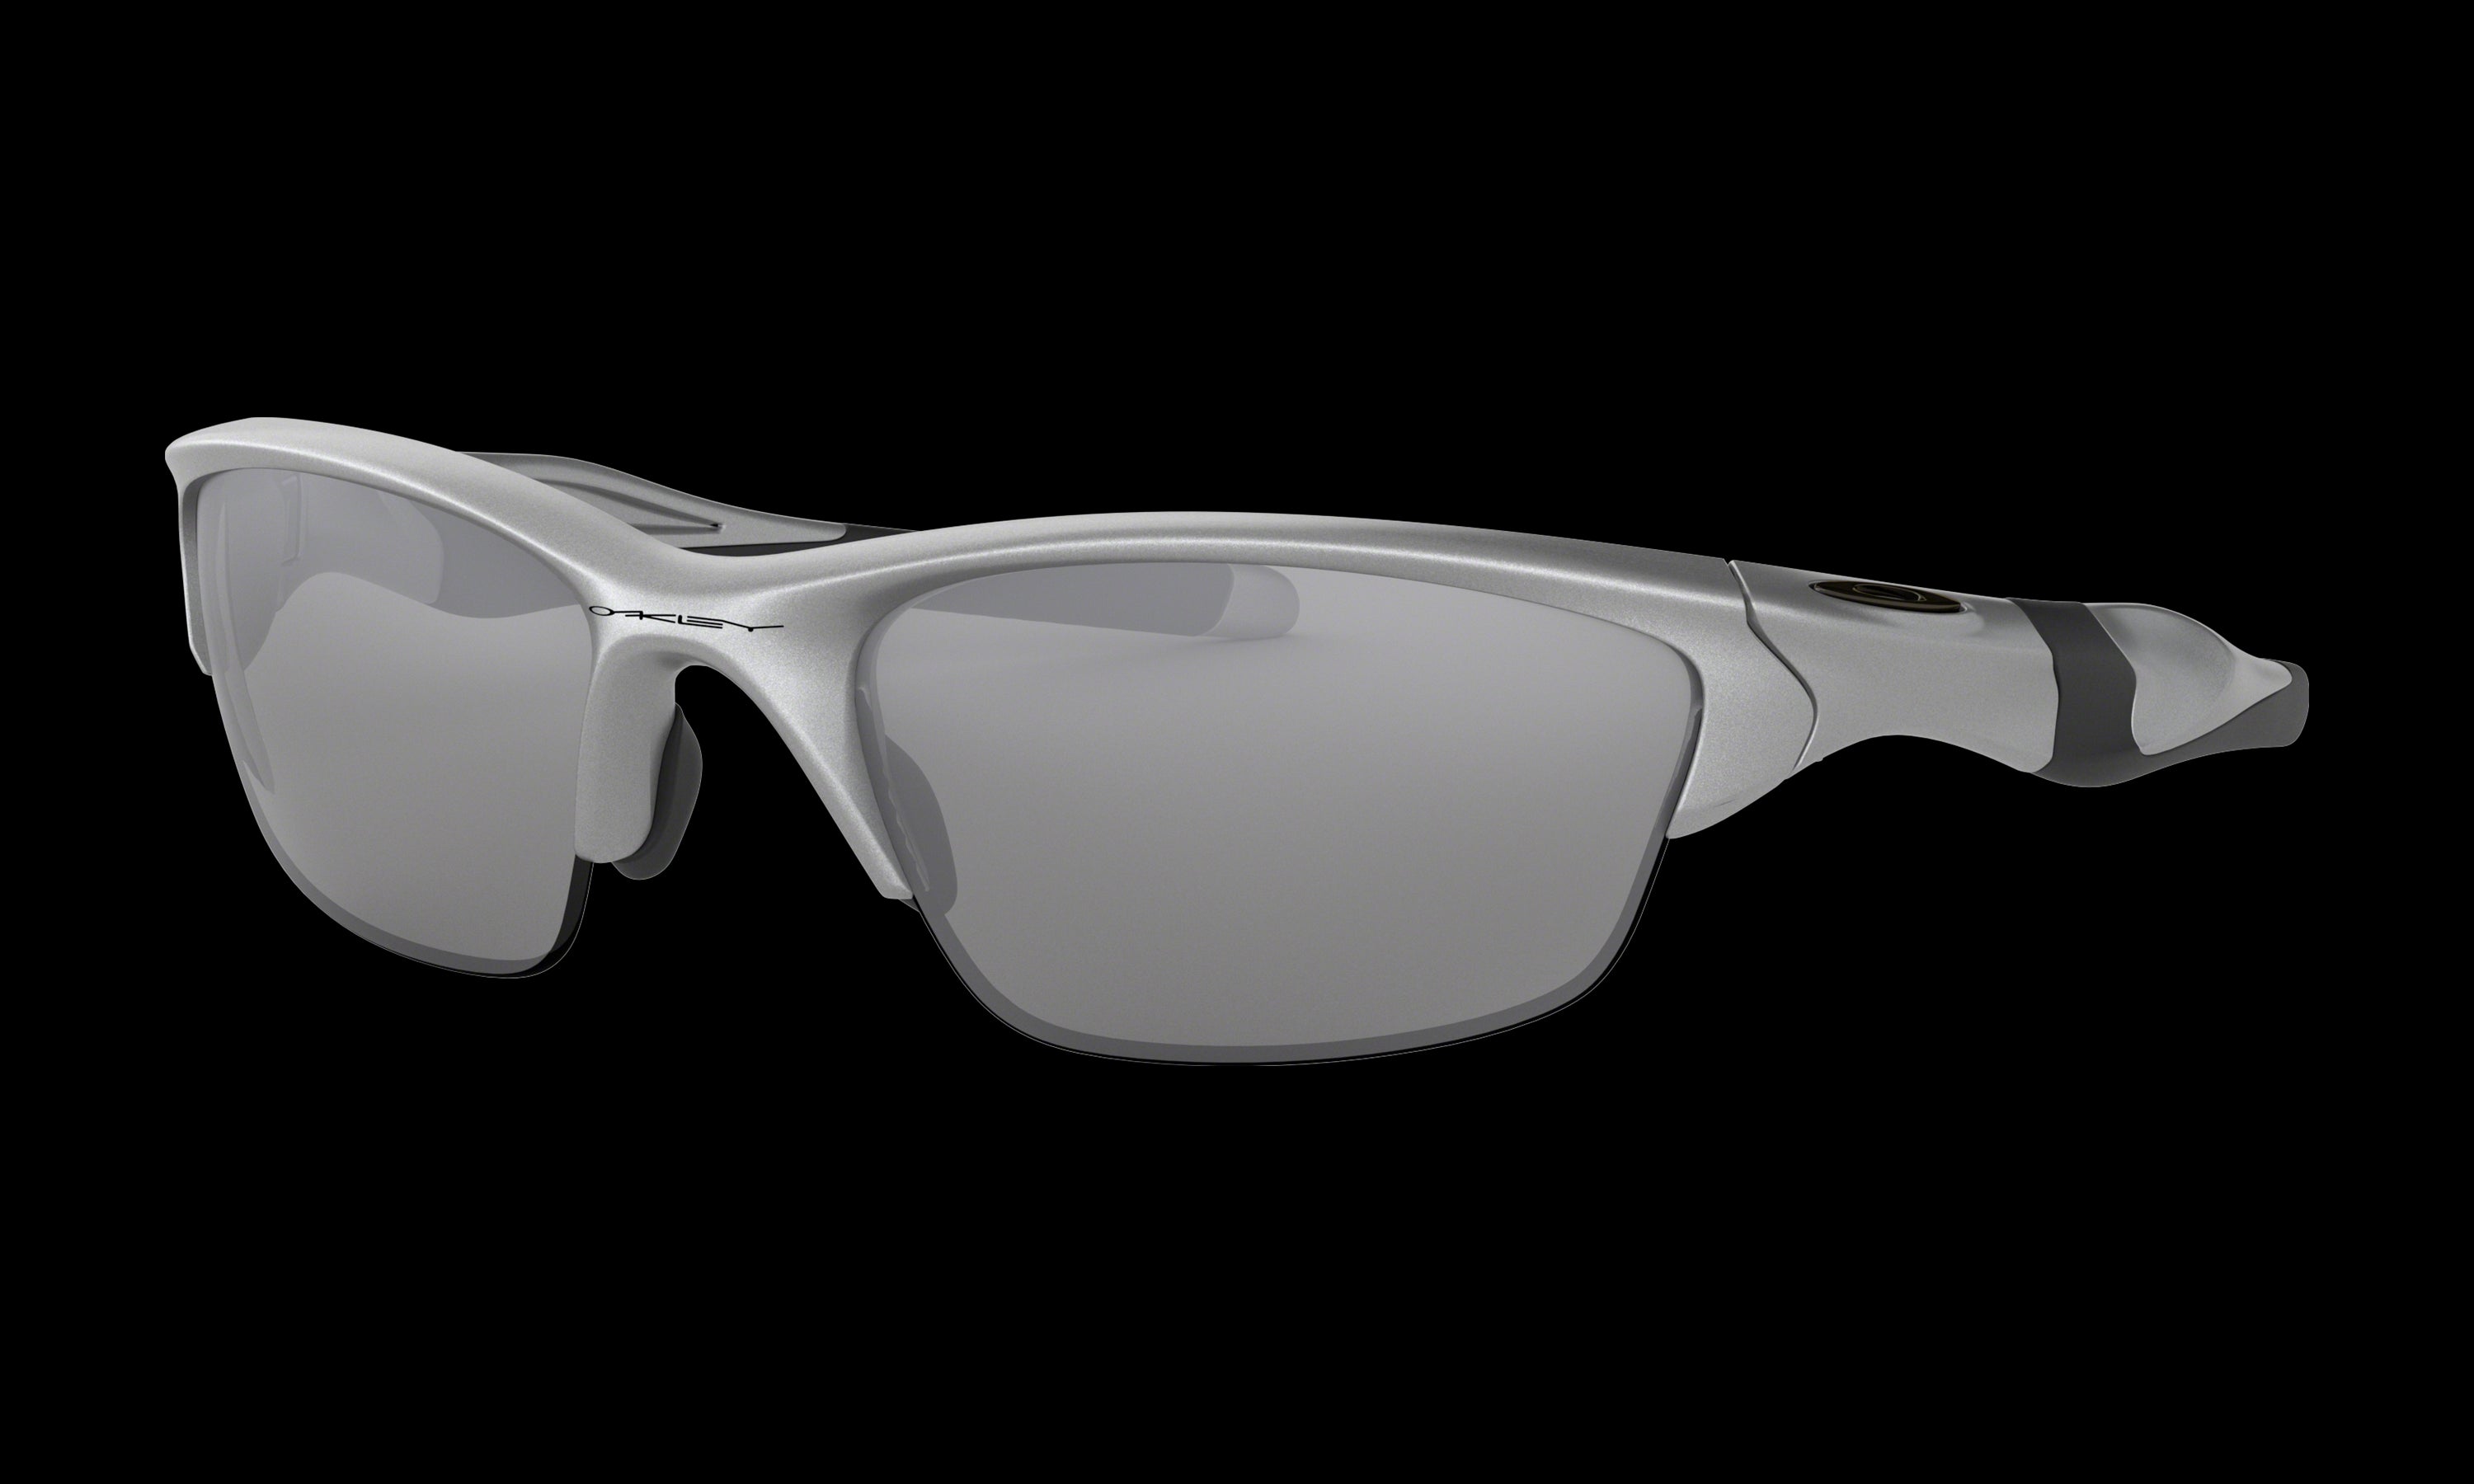 Men's Oakley Half Jacket 2.0 (Asia Fit) Sunglasses in Silver Slate Iridium